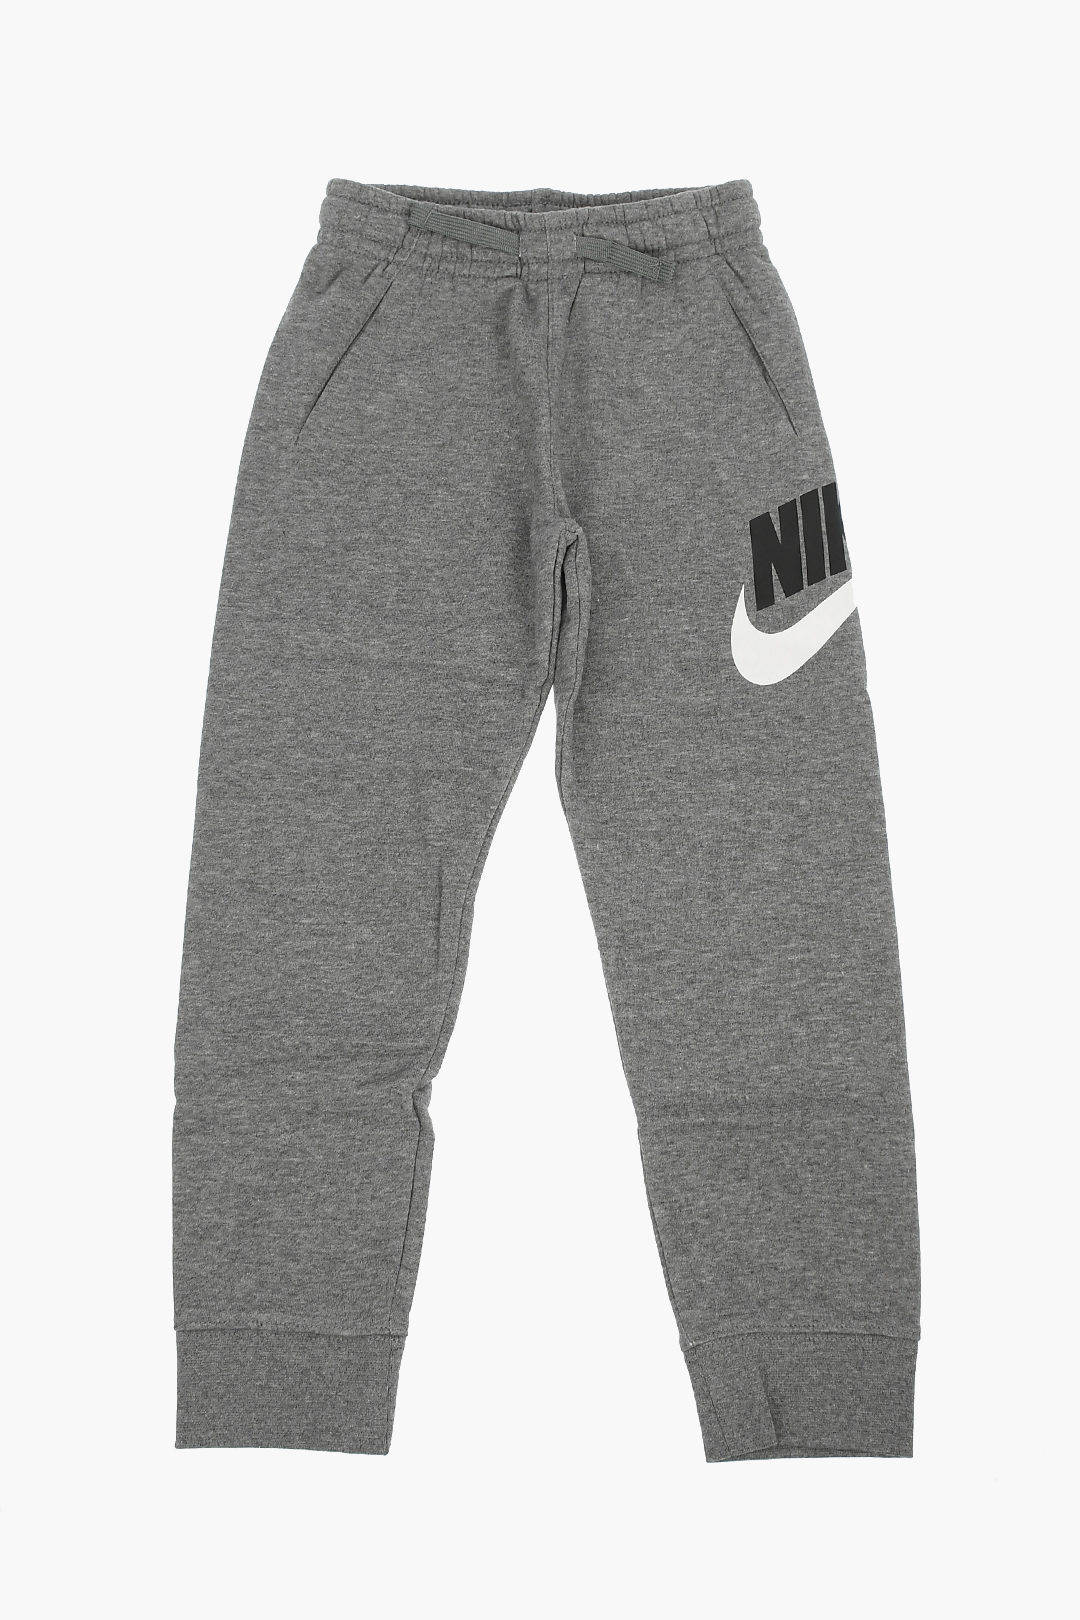 Nike KIDS AIR JORDAN high waist JUMPMAN leggings girls - Glamood Outlet